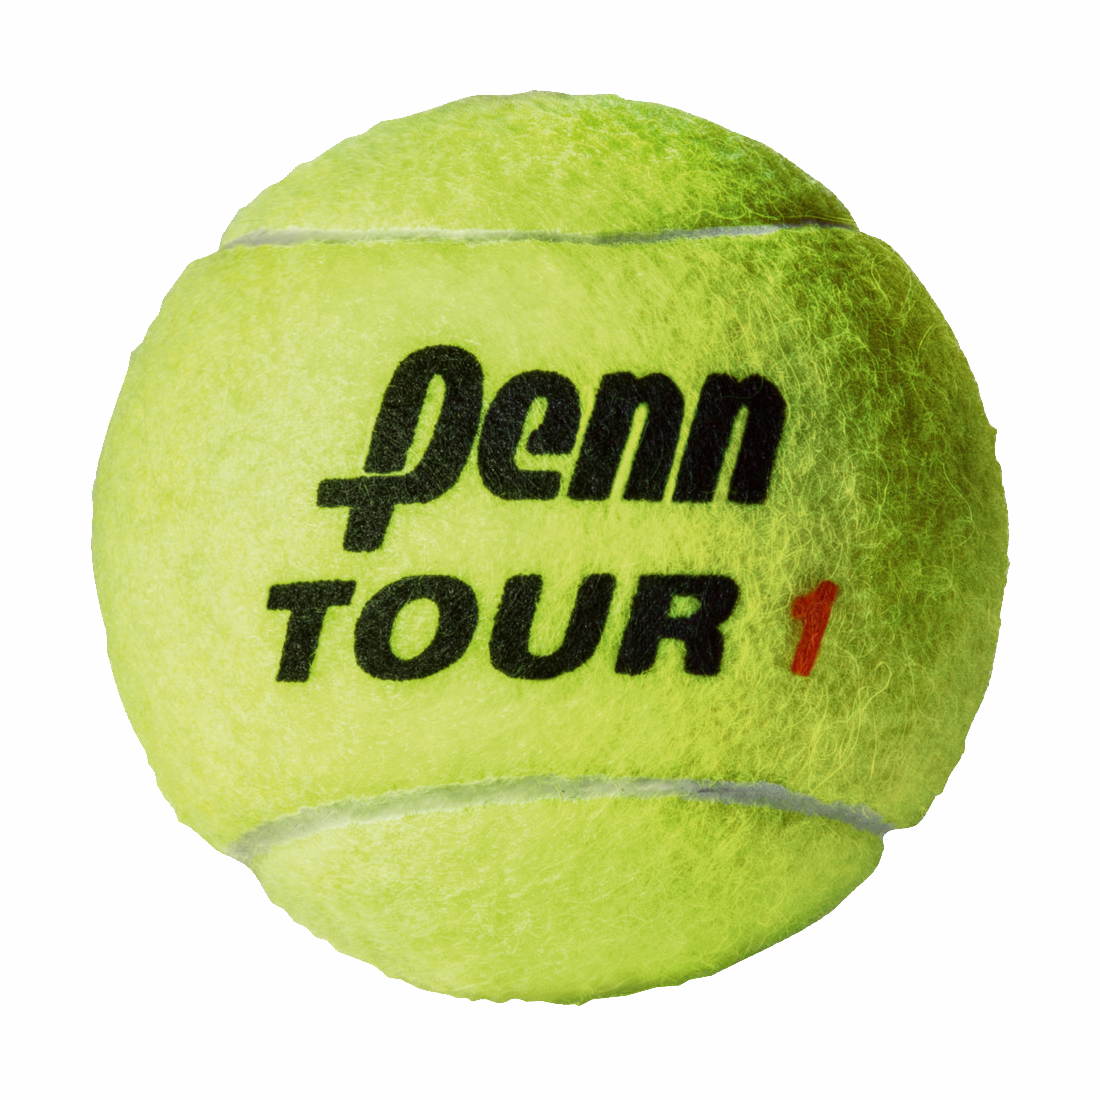 Tour Extra Duty Tennis Balls alternate view